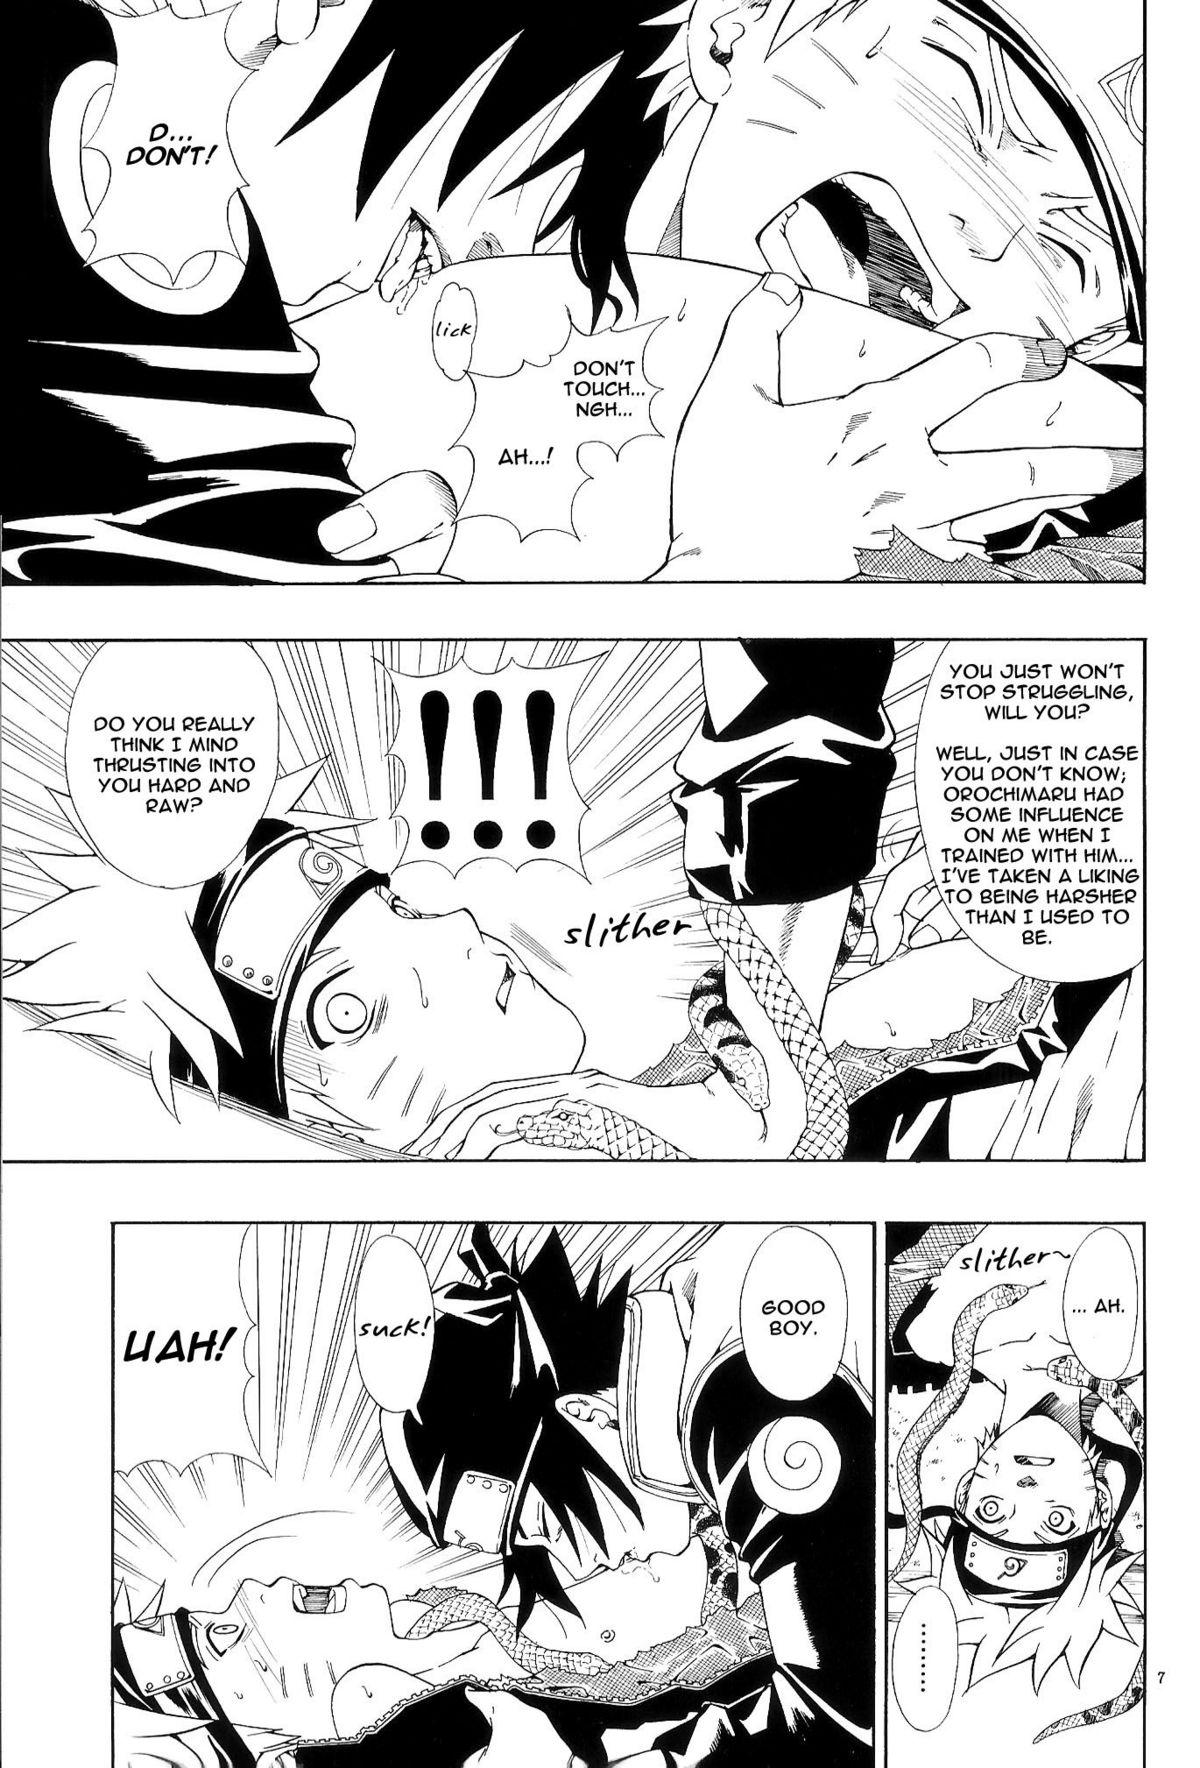 Freak ERO ERO²: Volume 1.5 (NARUTO) [Sasuke X Naruto] YAOI -ENG- - Naruto Tease - Page 6